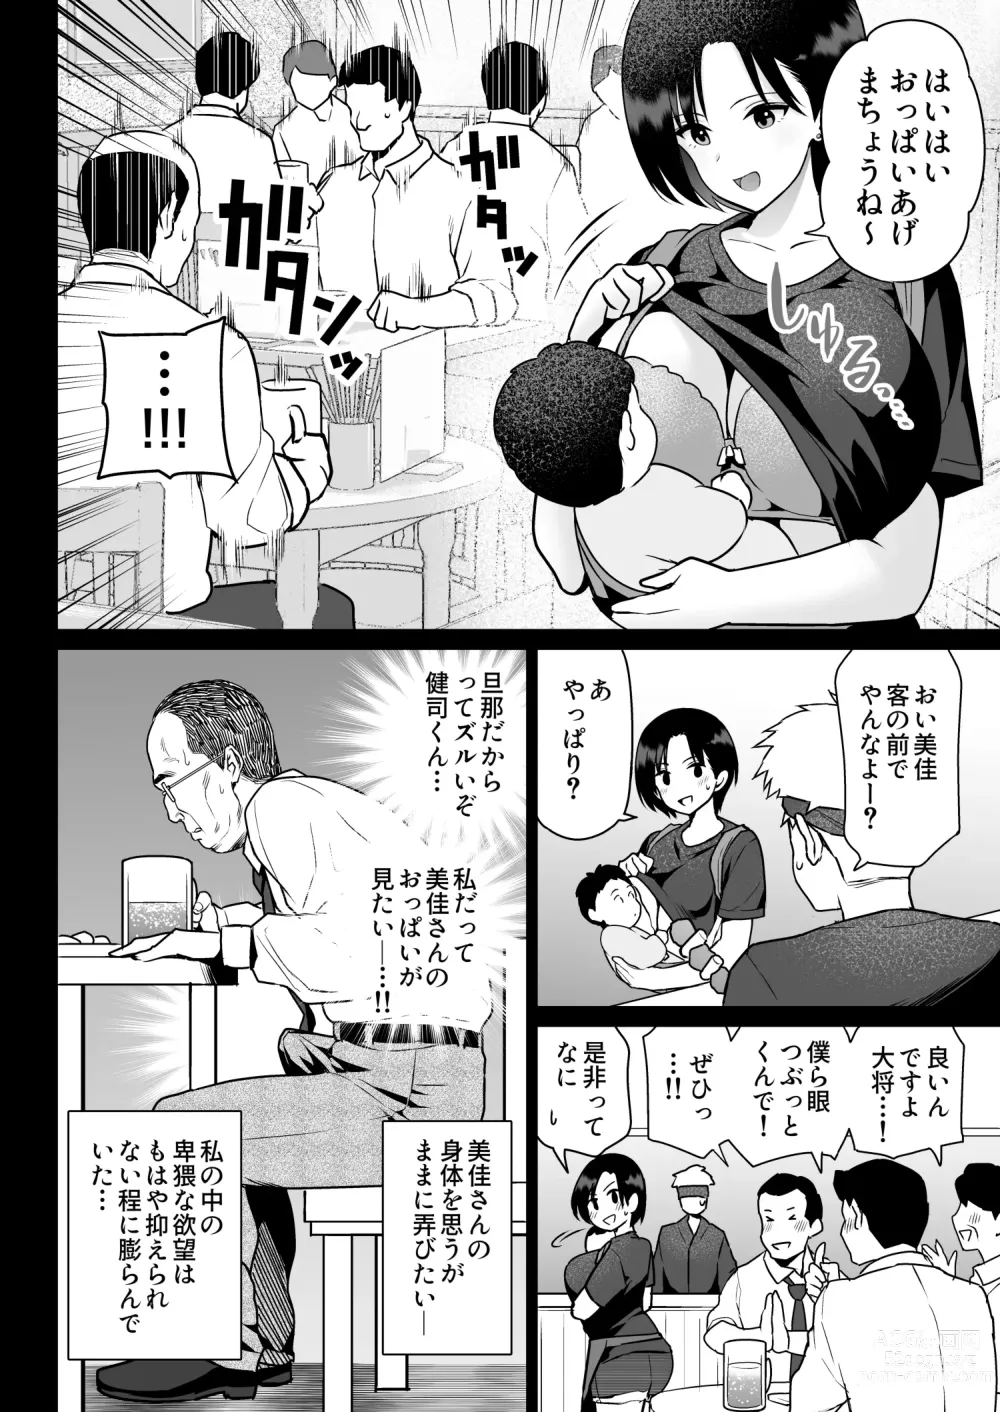 Page 5 of doujinshi Oshidori Fuufu Yakitorare